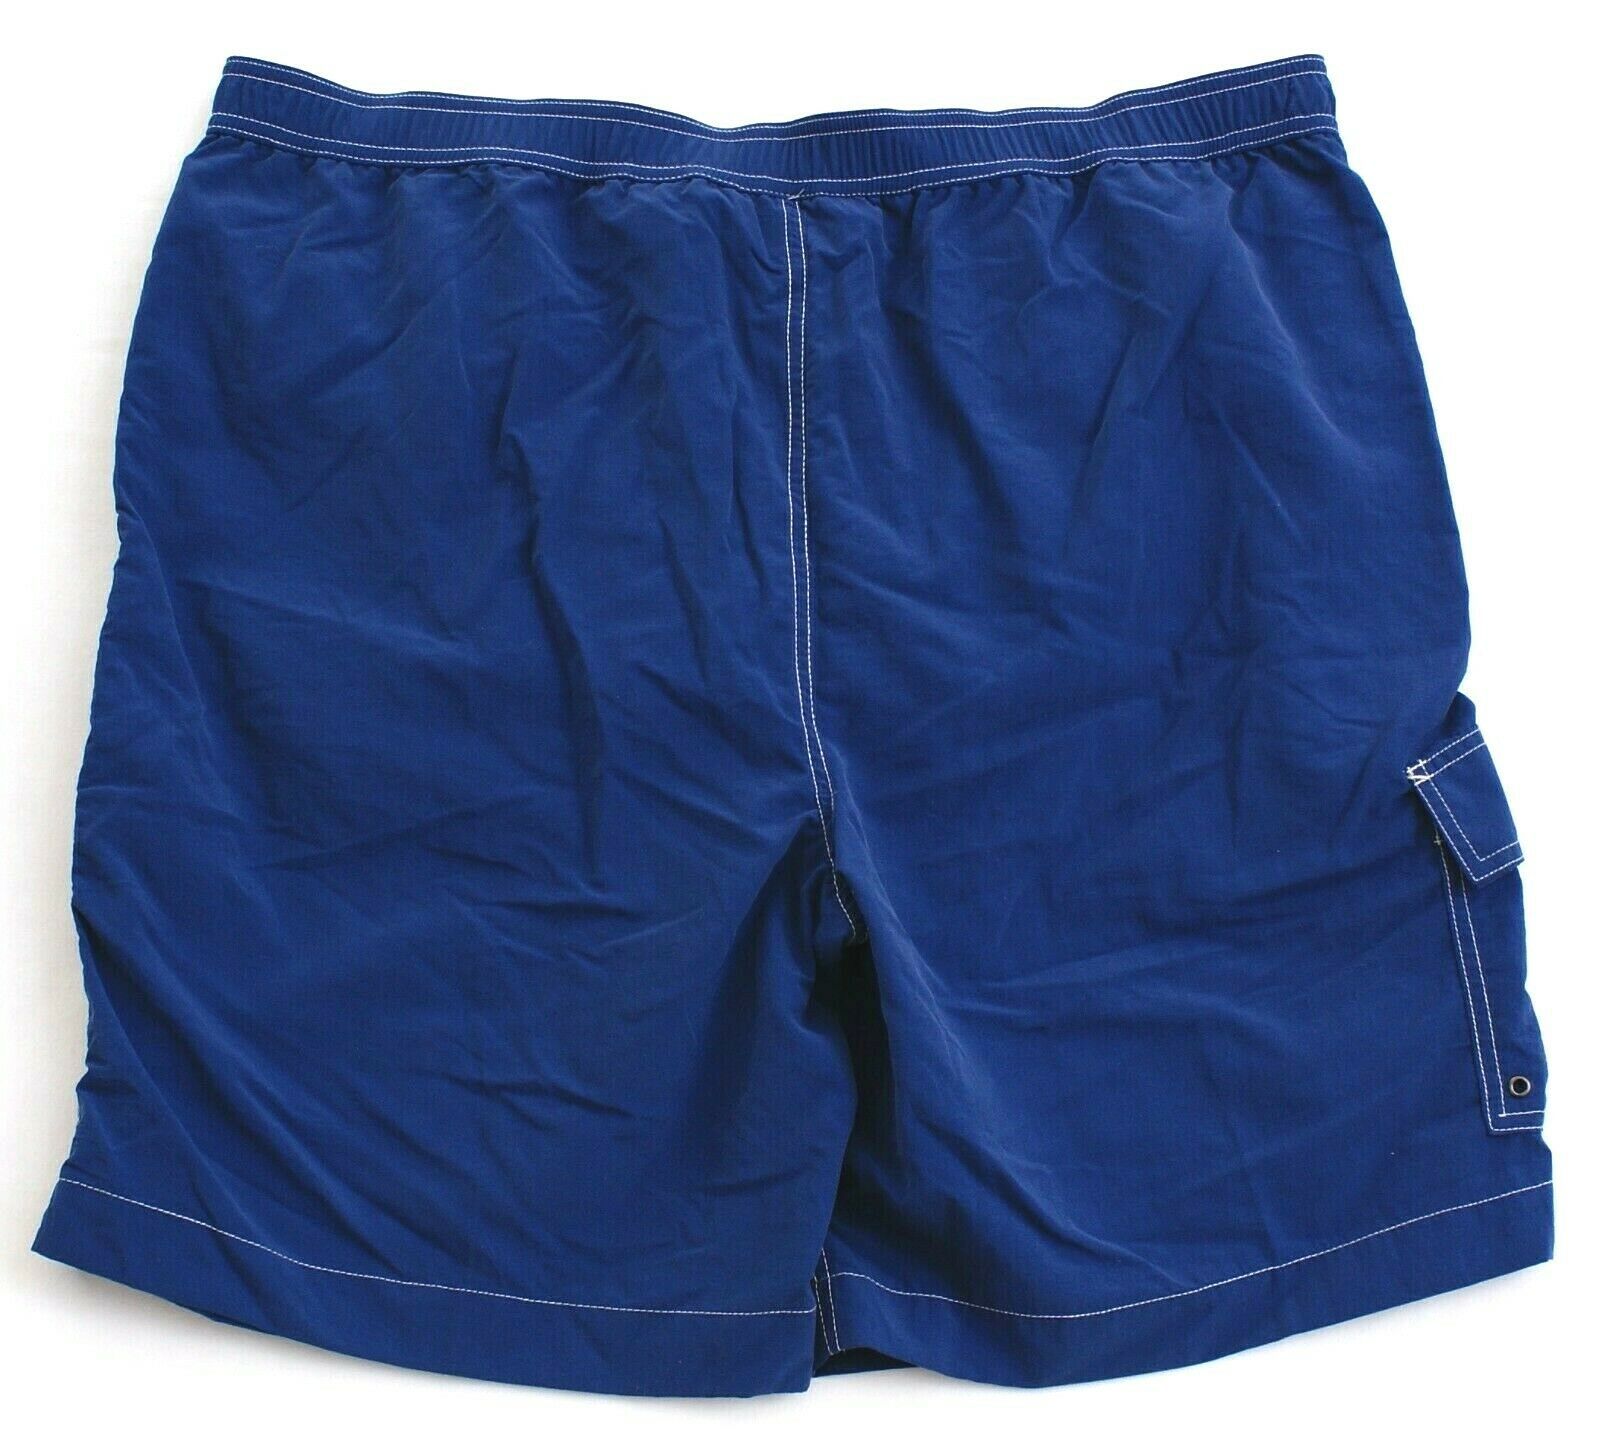 Chaps Blue Brief Lined Swim Trunks Water Shorts Men's NEW - Swimwear